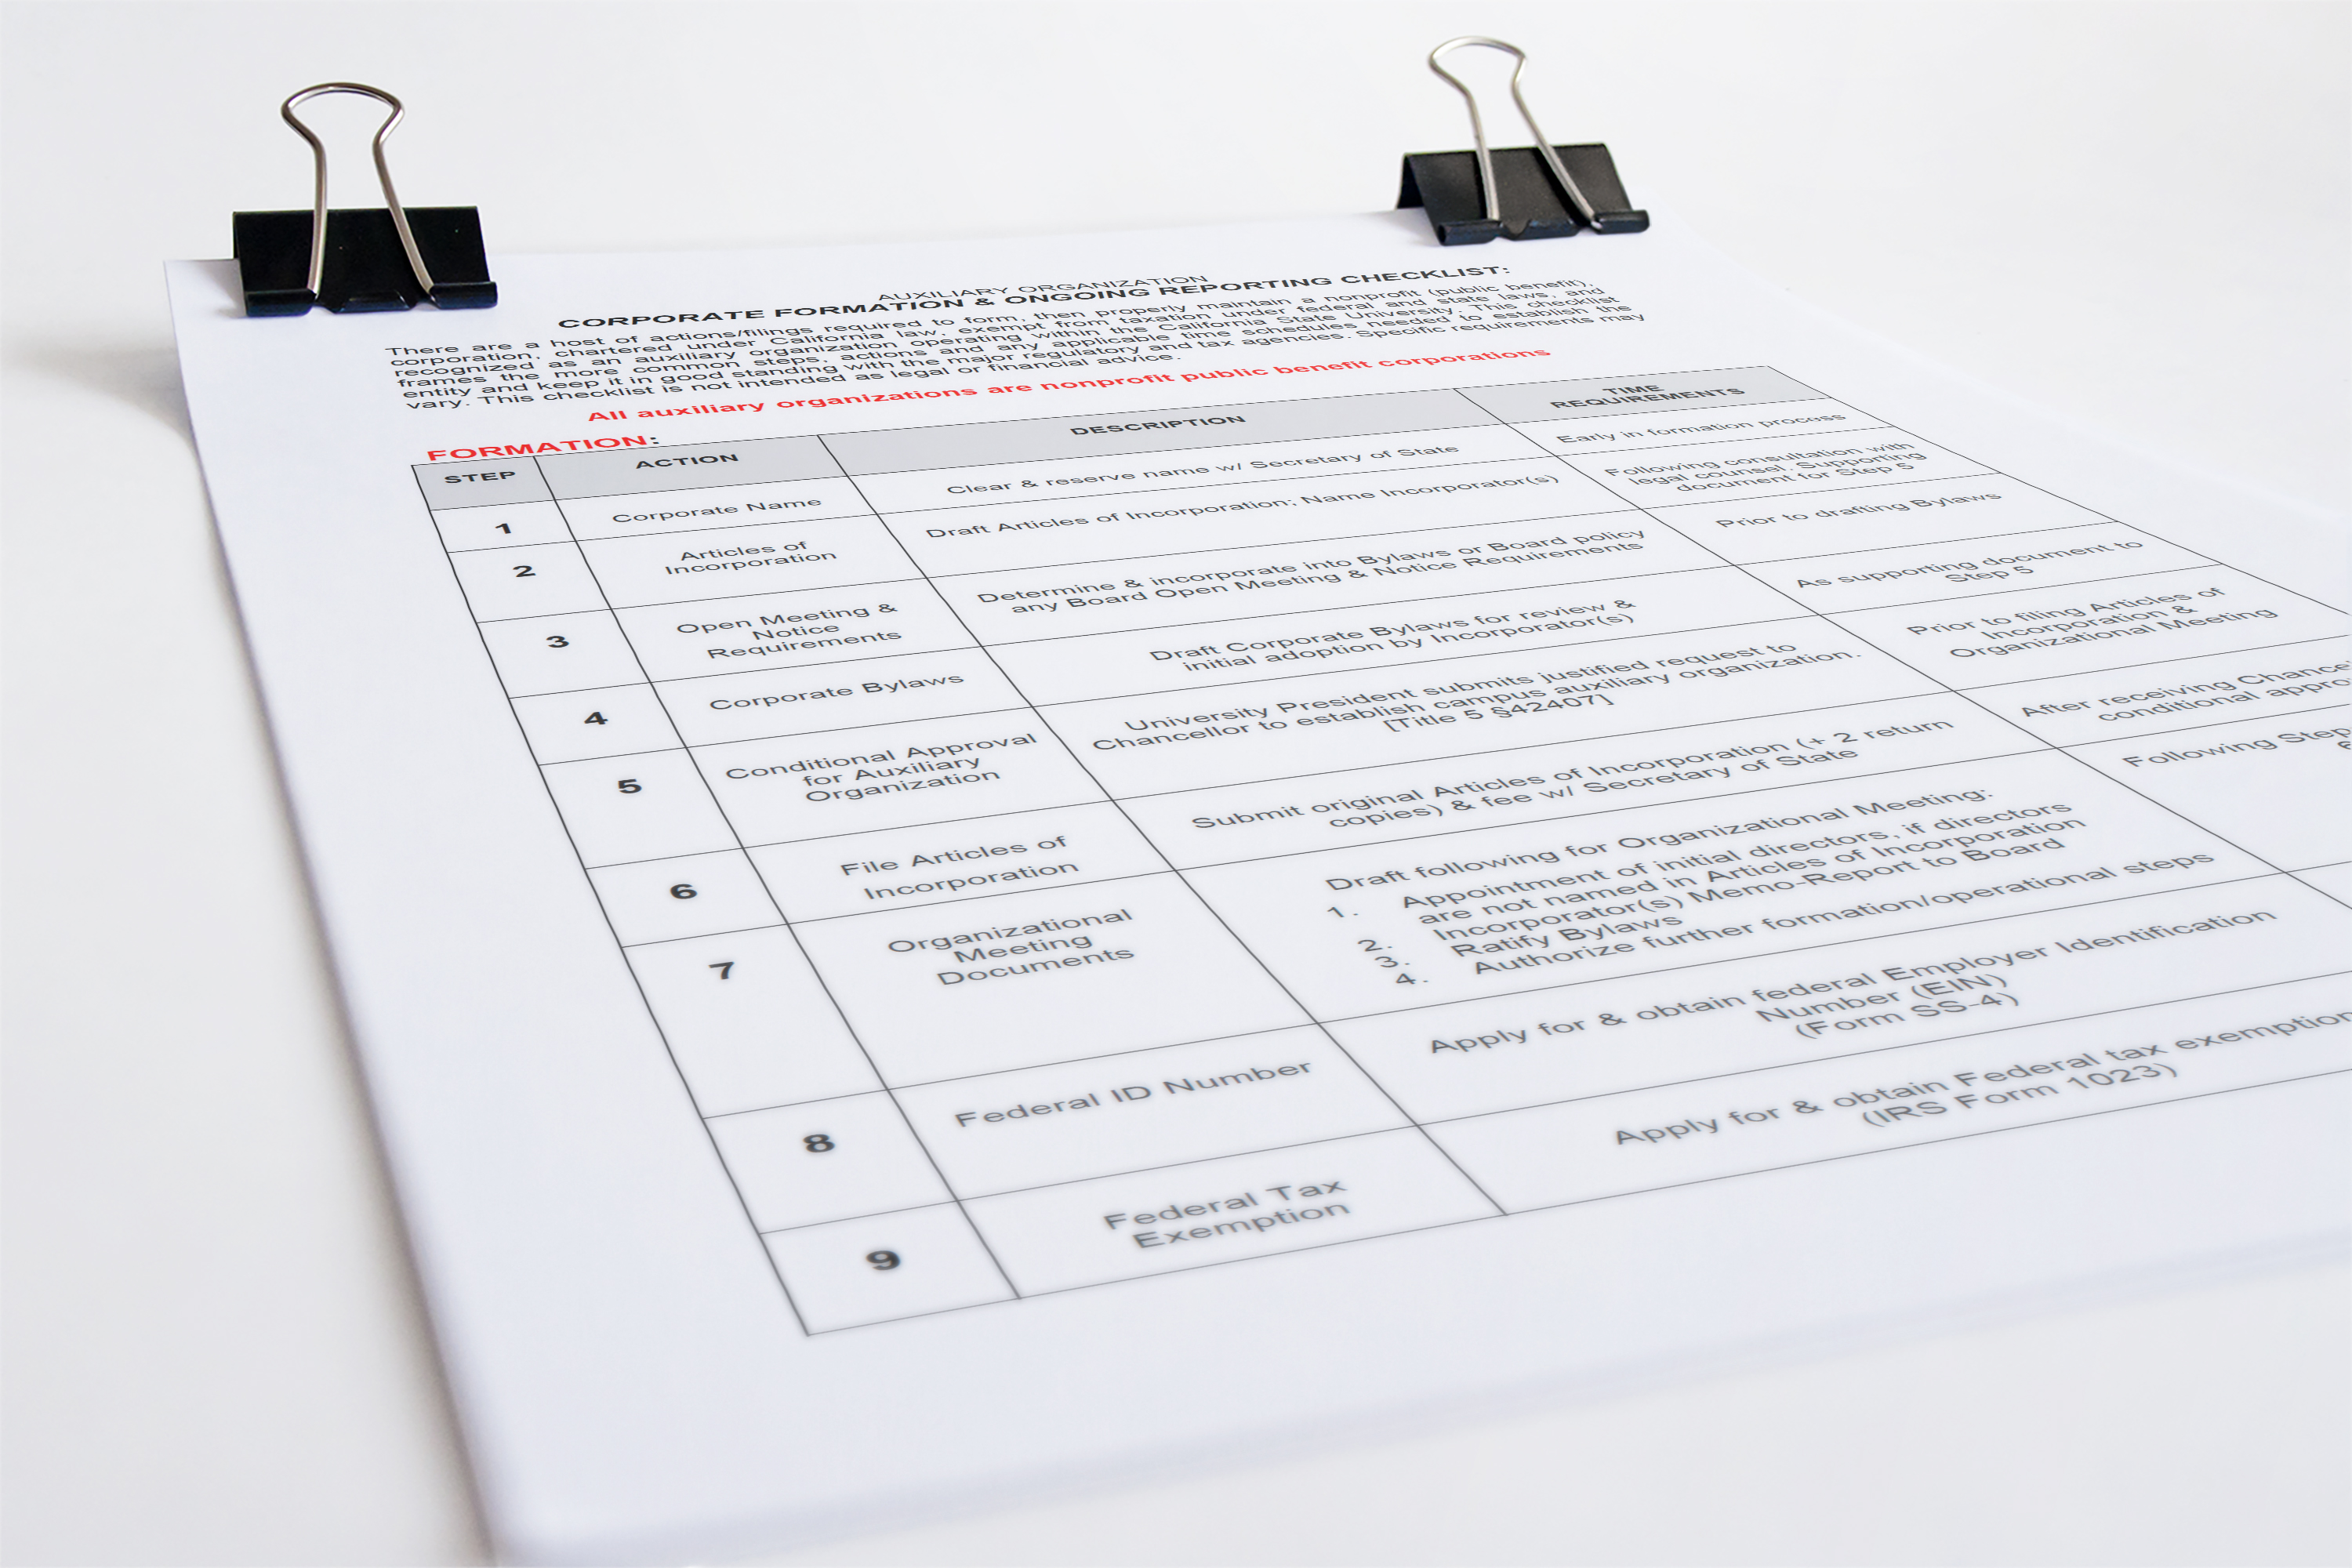 AoA business reporting checklist